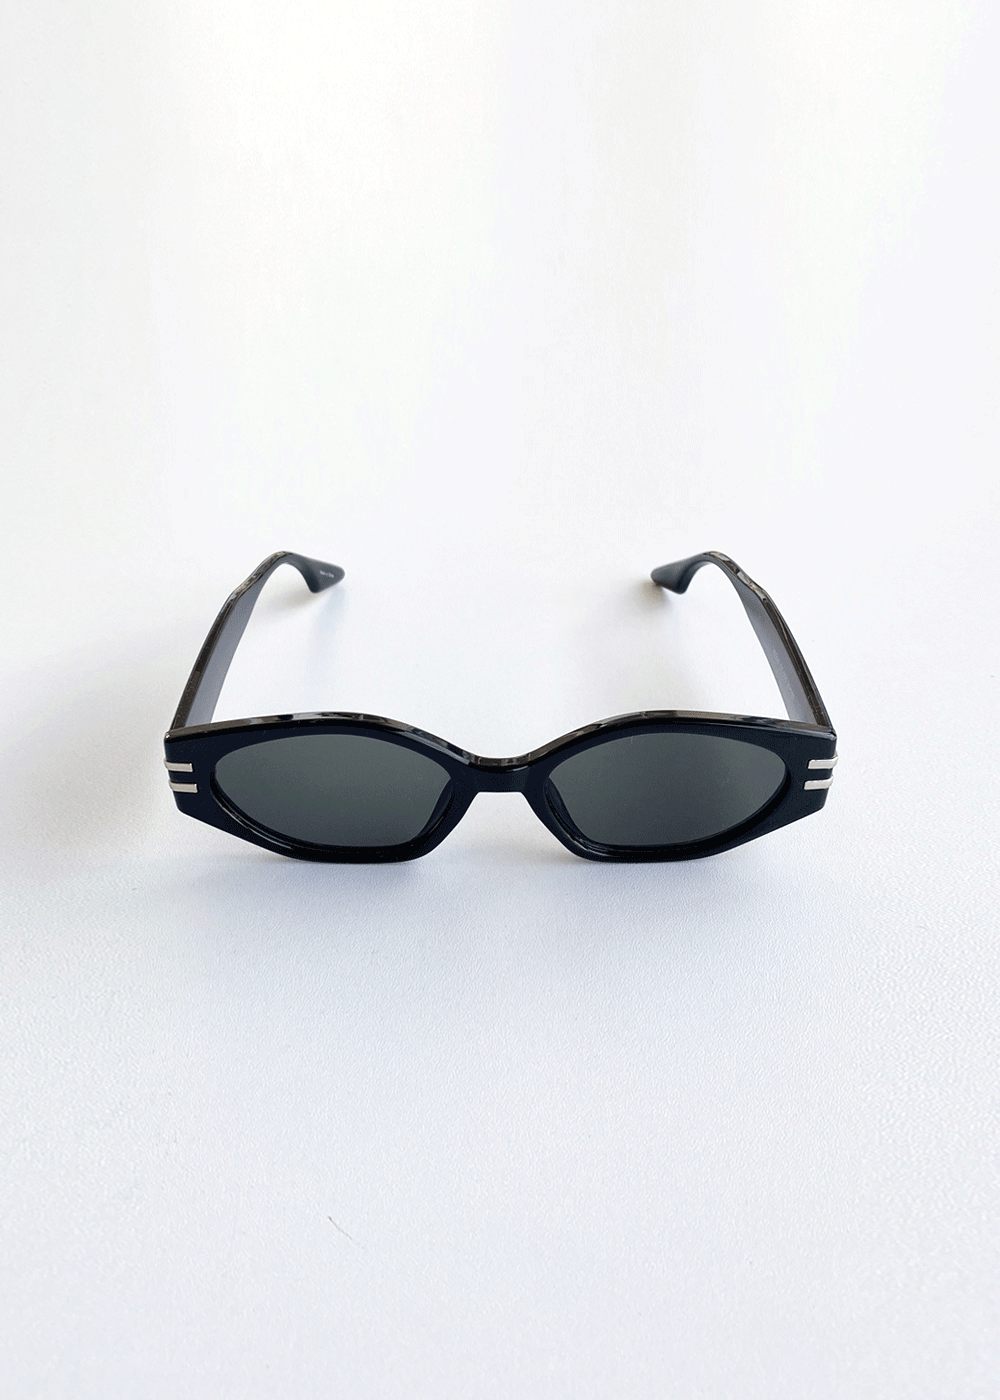 Blackjack sunglasses